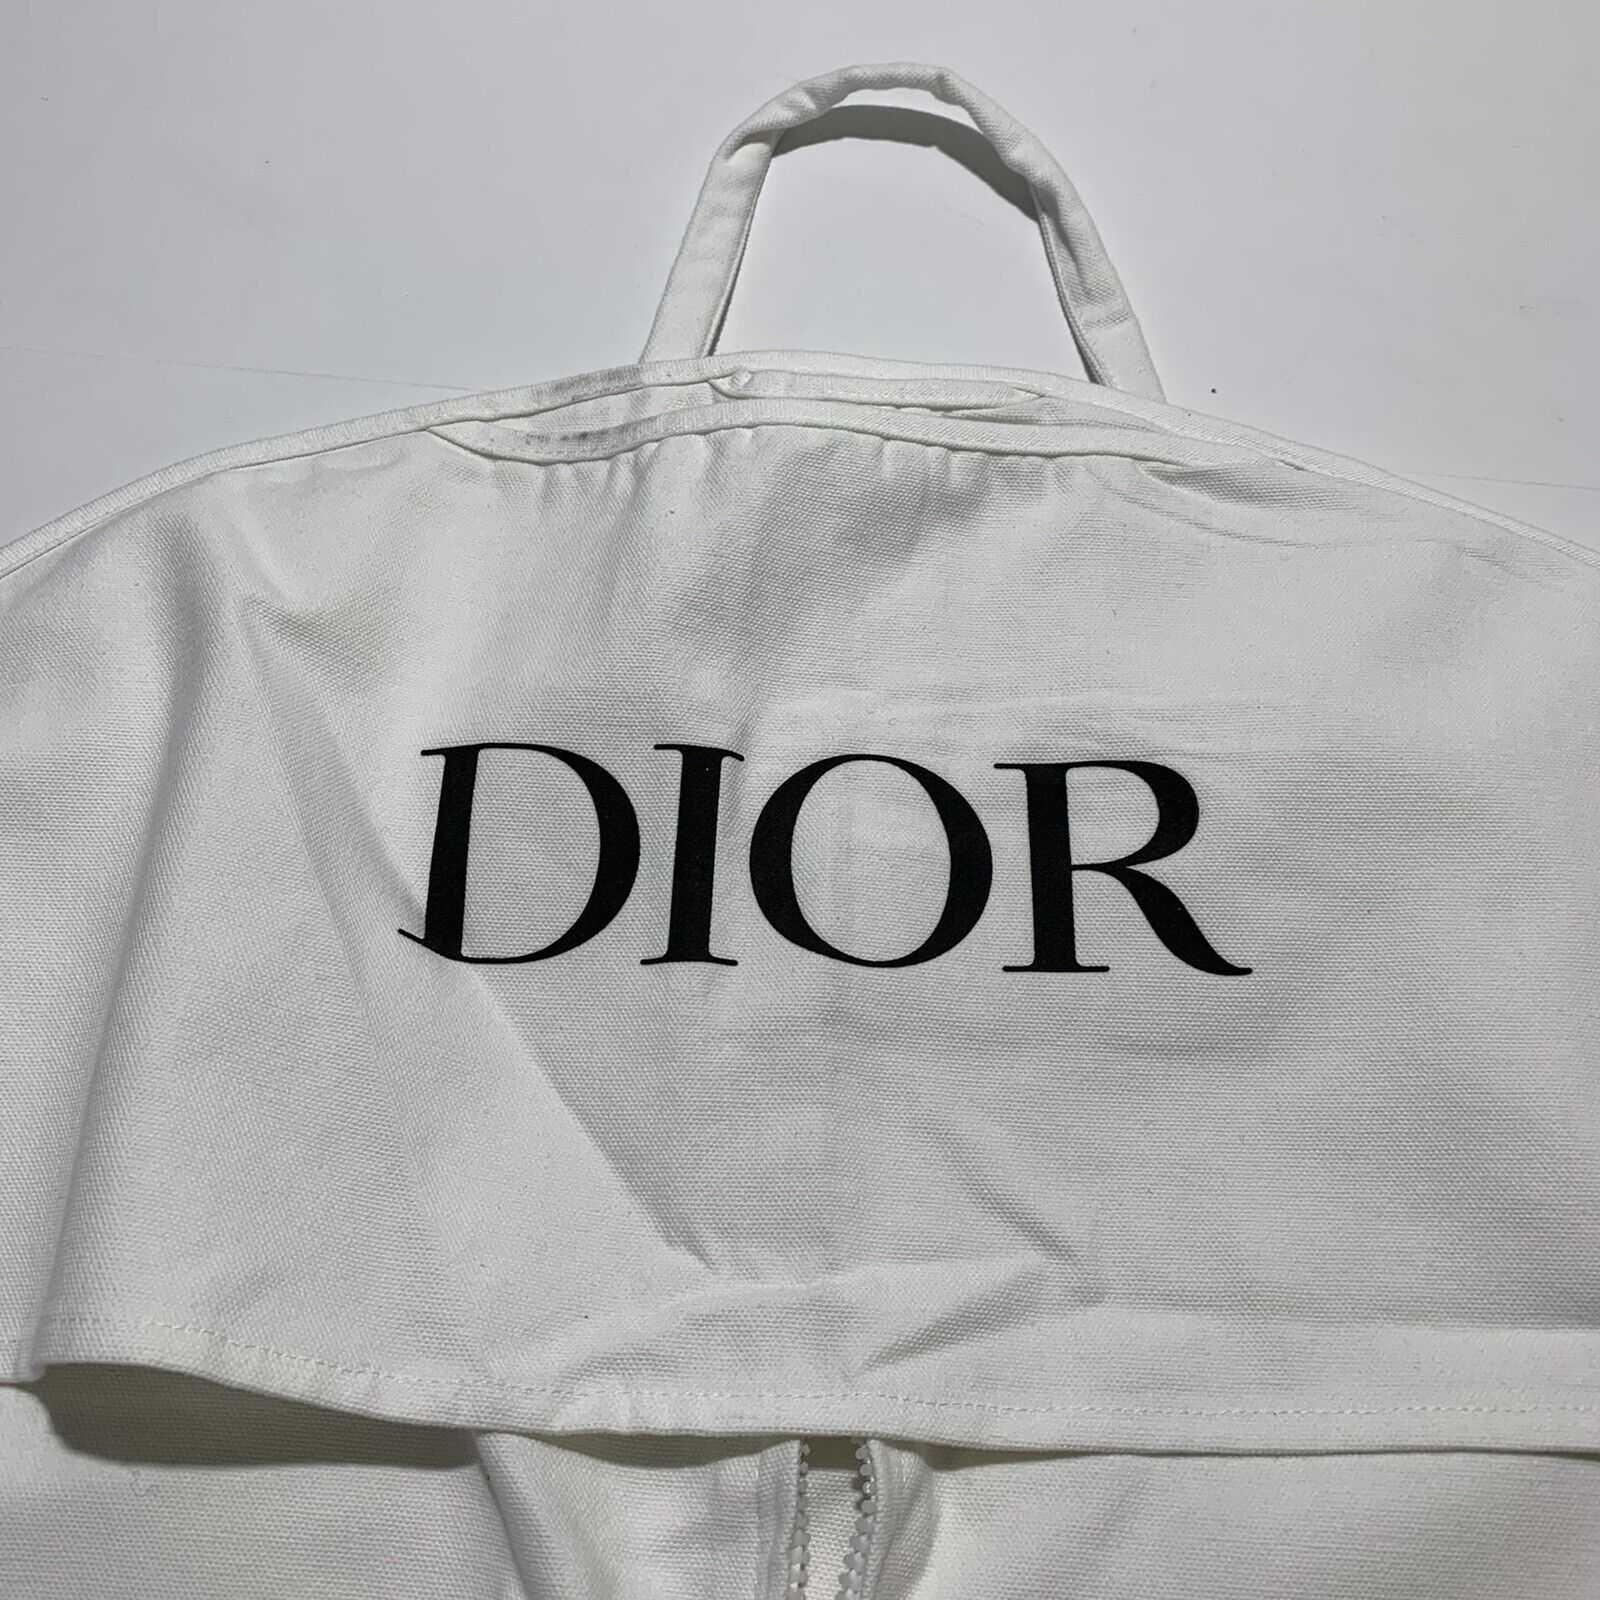 Protectie anti-praf pentru haine Christian Dior bumbac